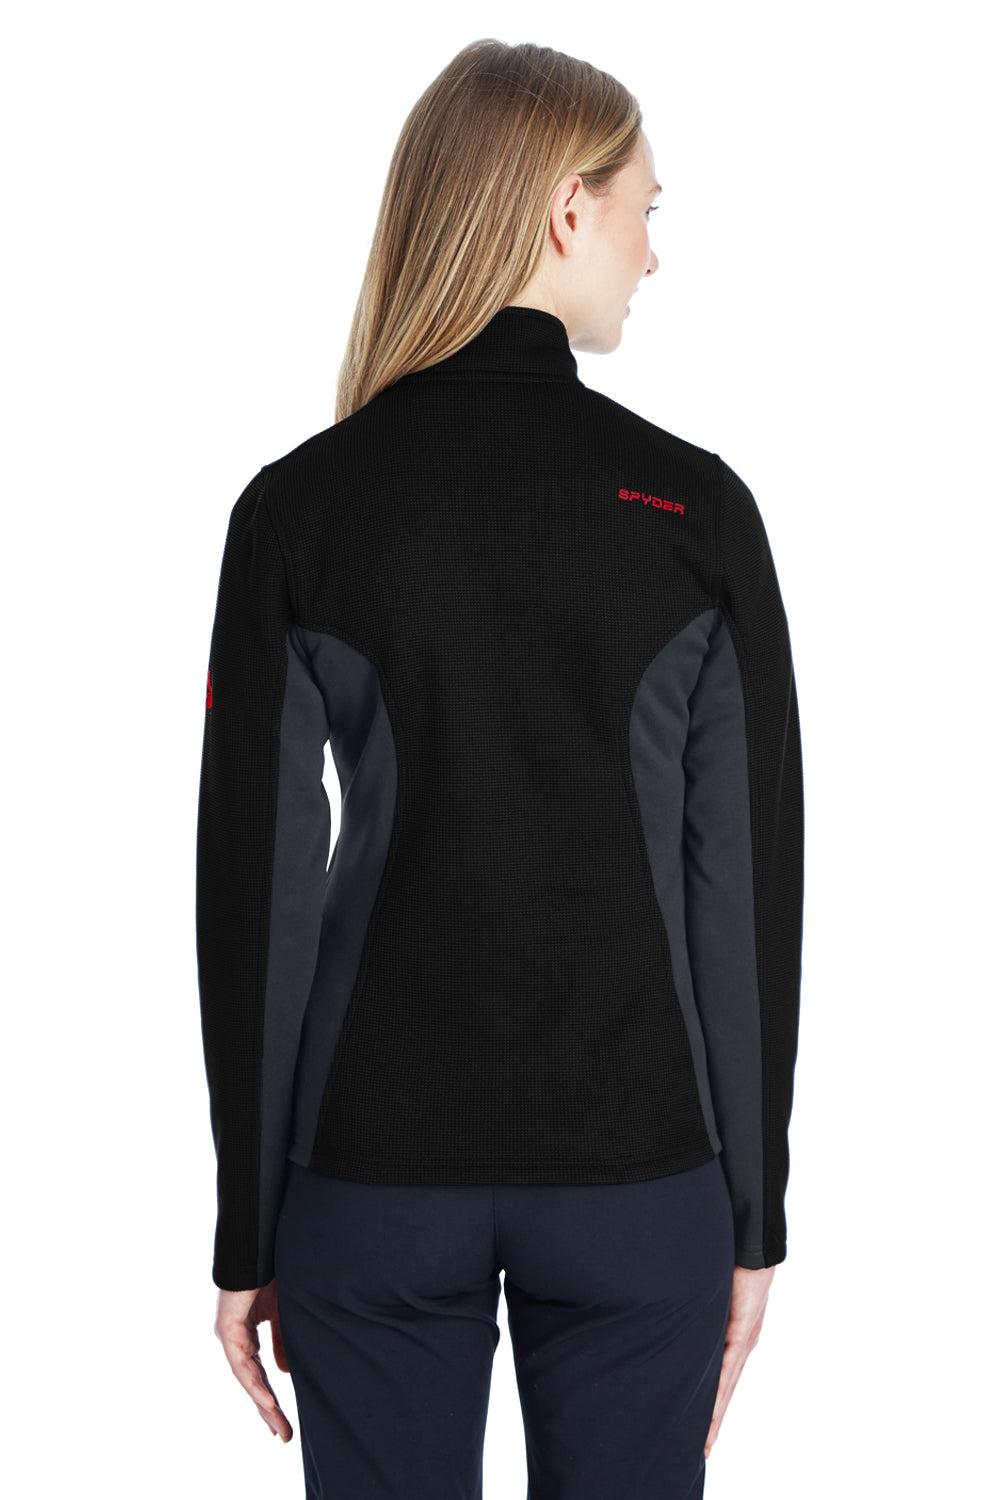 Spyder 187335 Womens Constant Full Zip Sweater Fleece Jacket Black Back